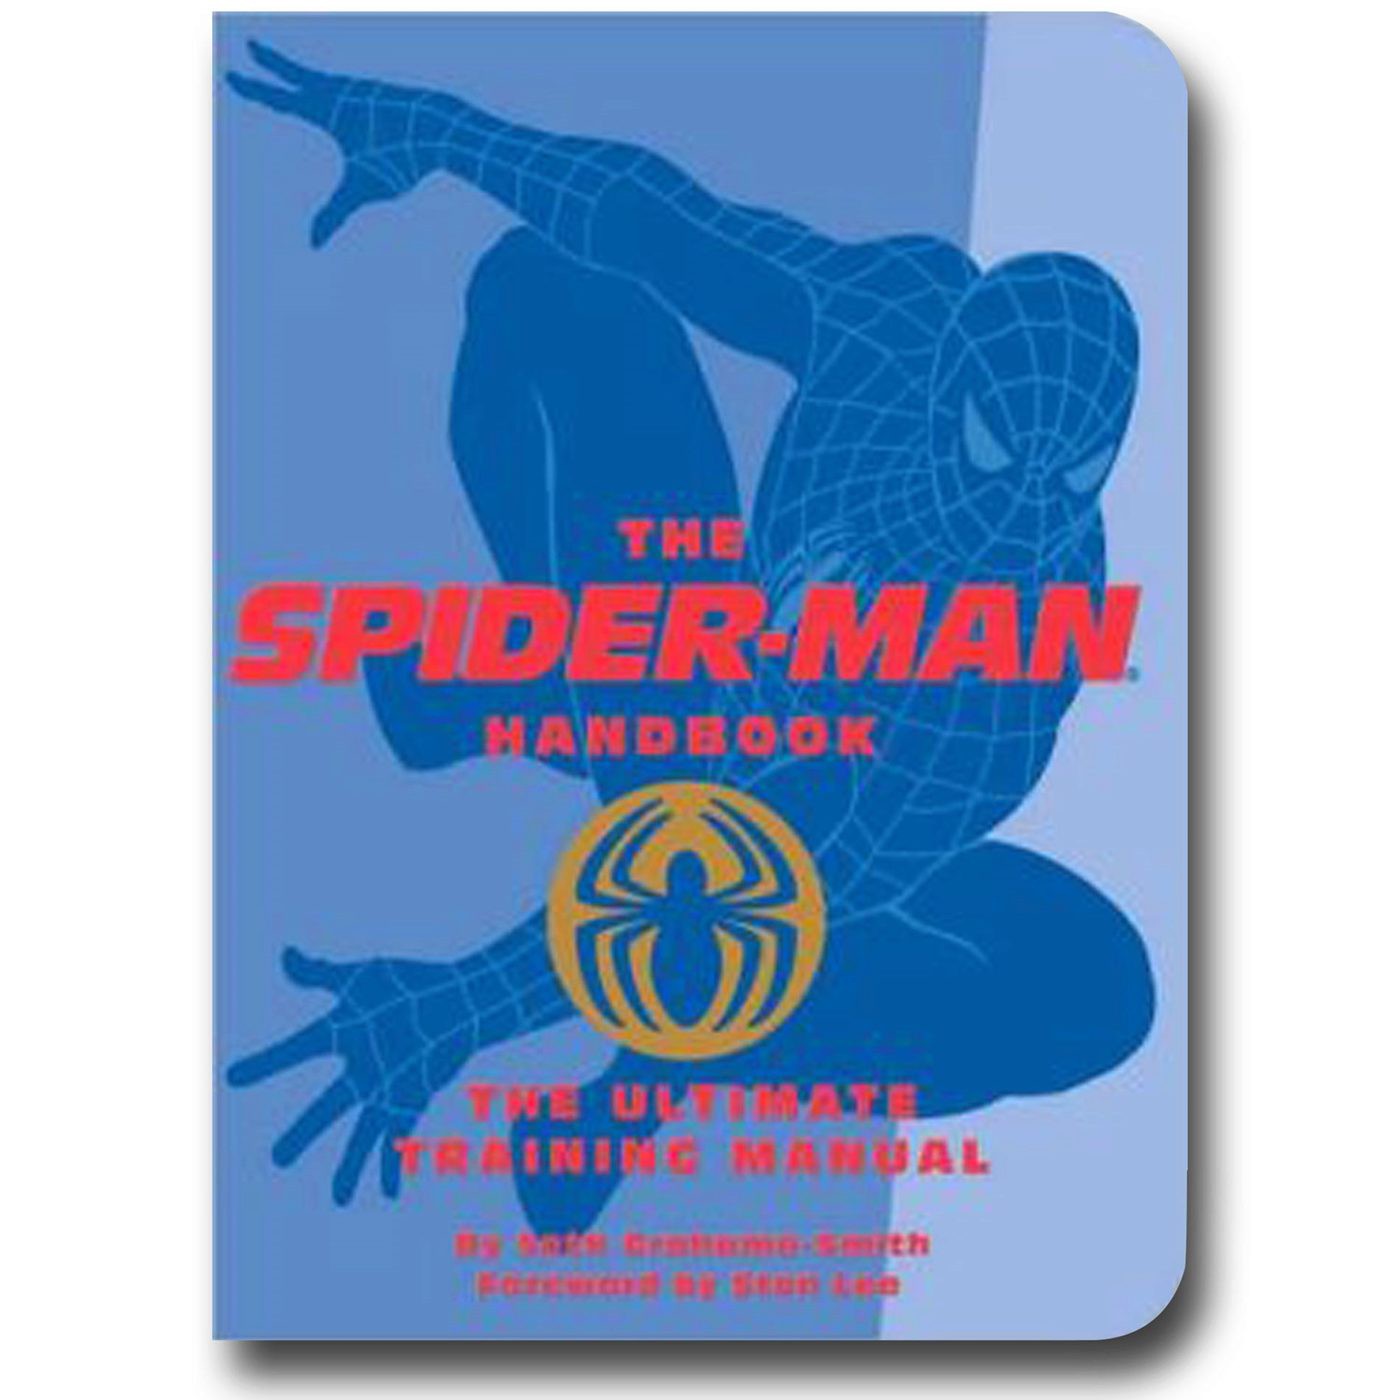 The Spiderman Handbook